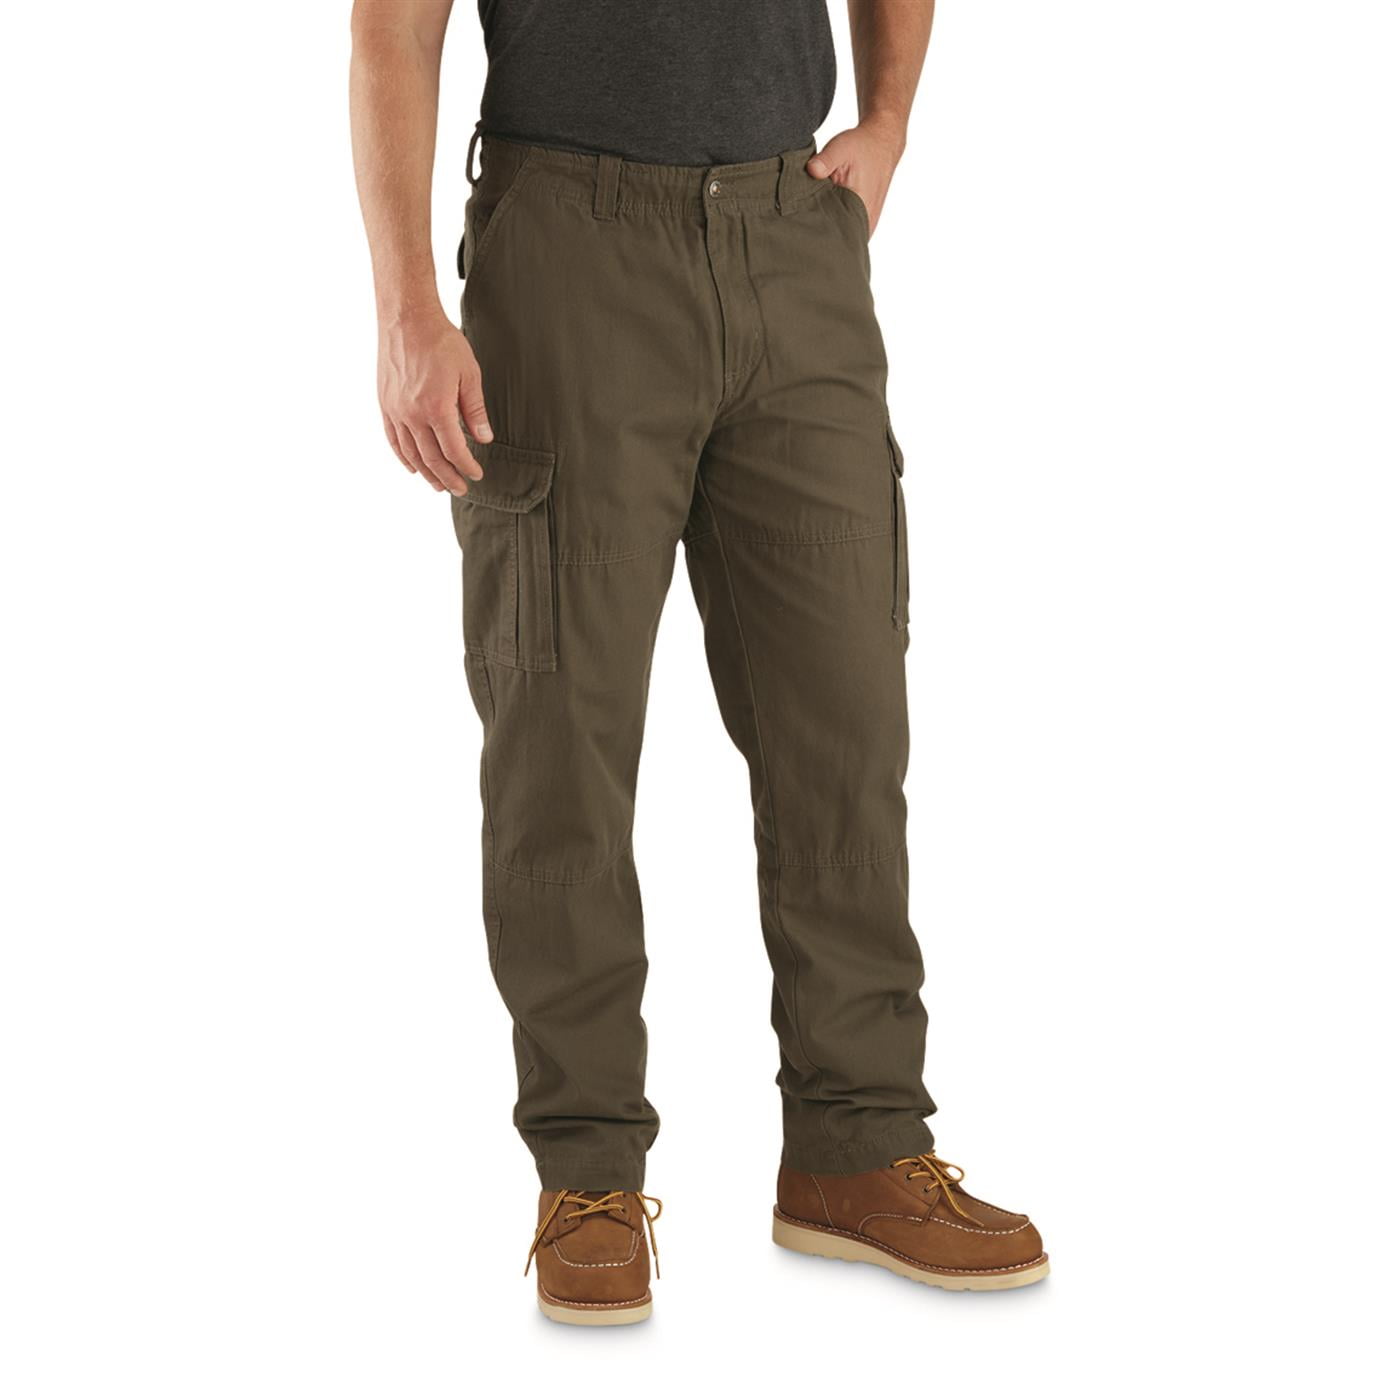 Gerry Men?s Fleece Lined Pant Stretch Fabric Zip Cargo Pocket (Gray, 38X32)  1426184 